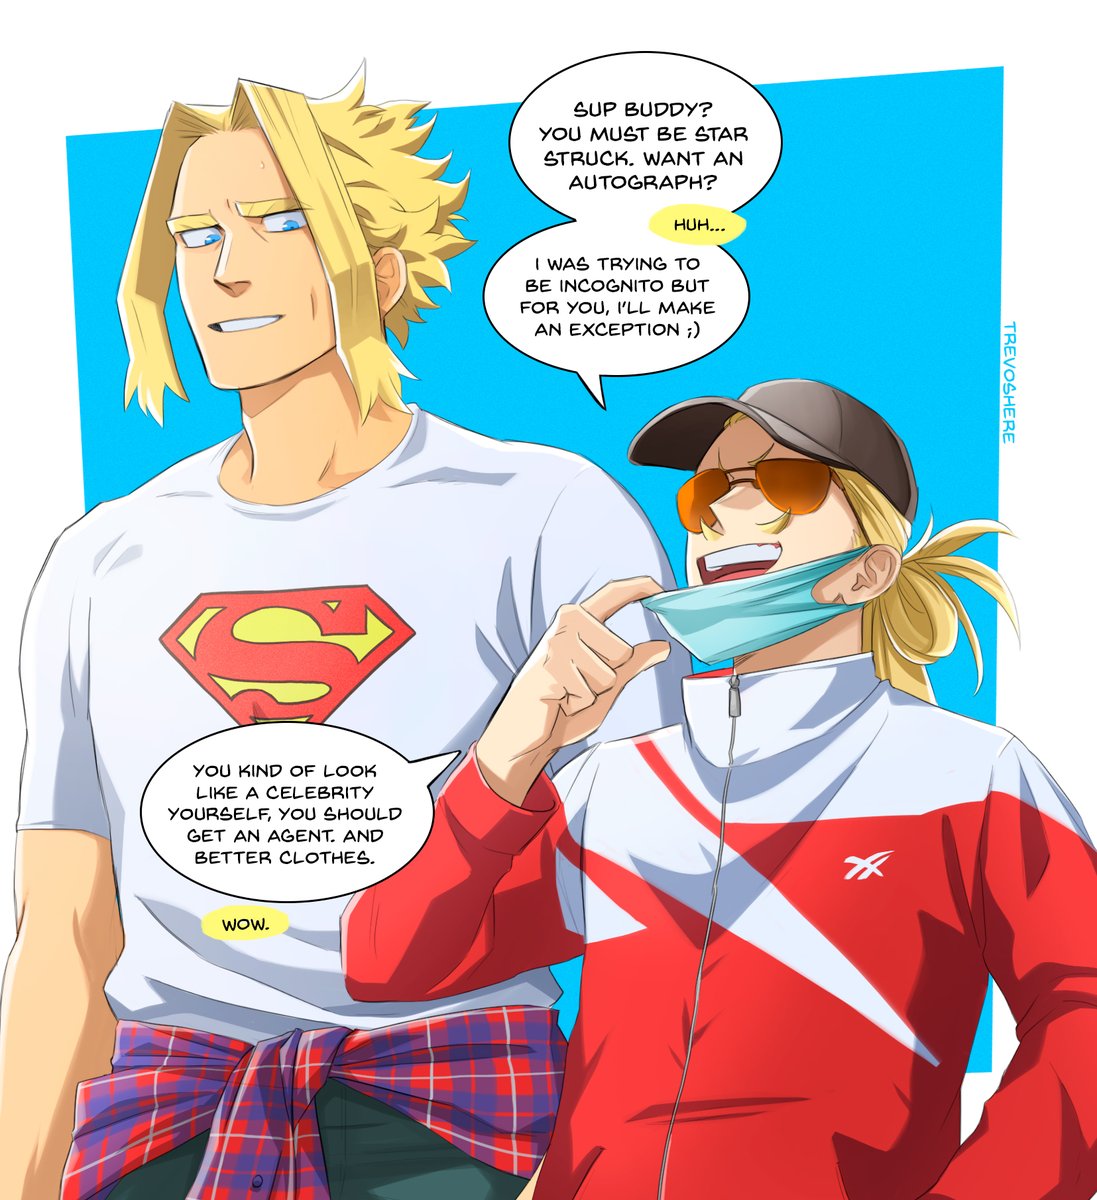 mouth mask blonde hair jacket shirt english text sunglasses 2boys  illustration images